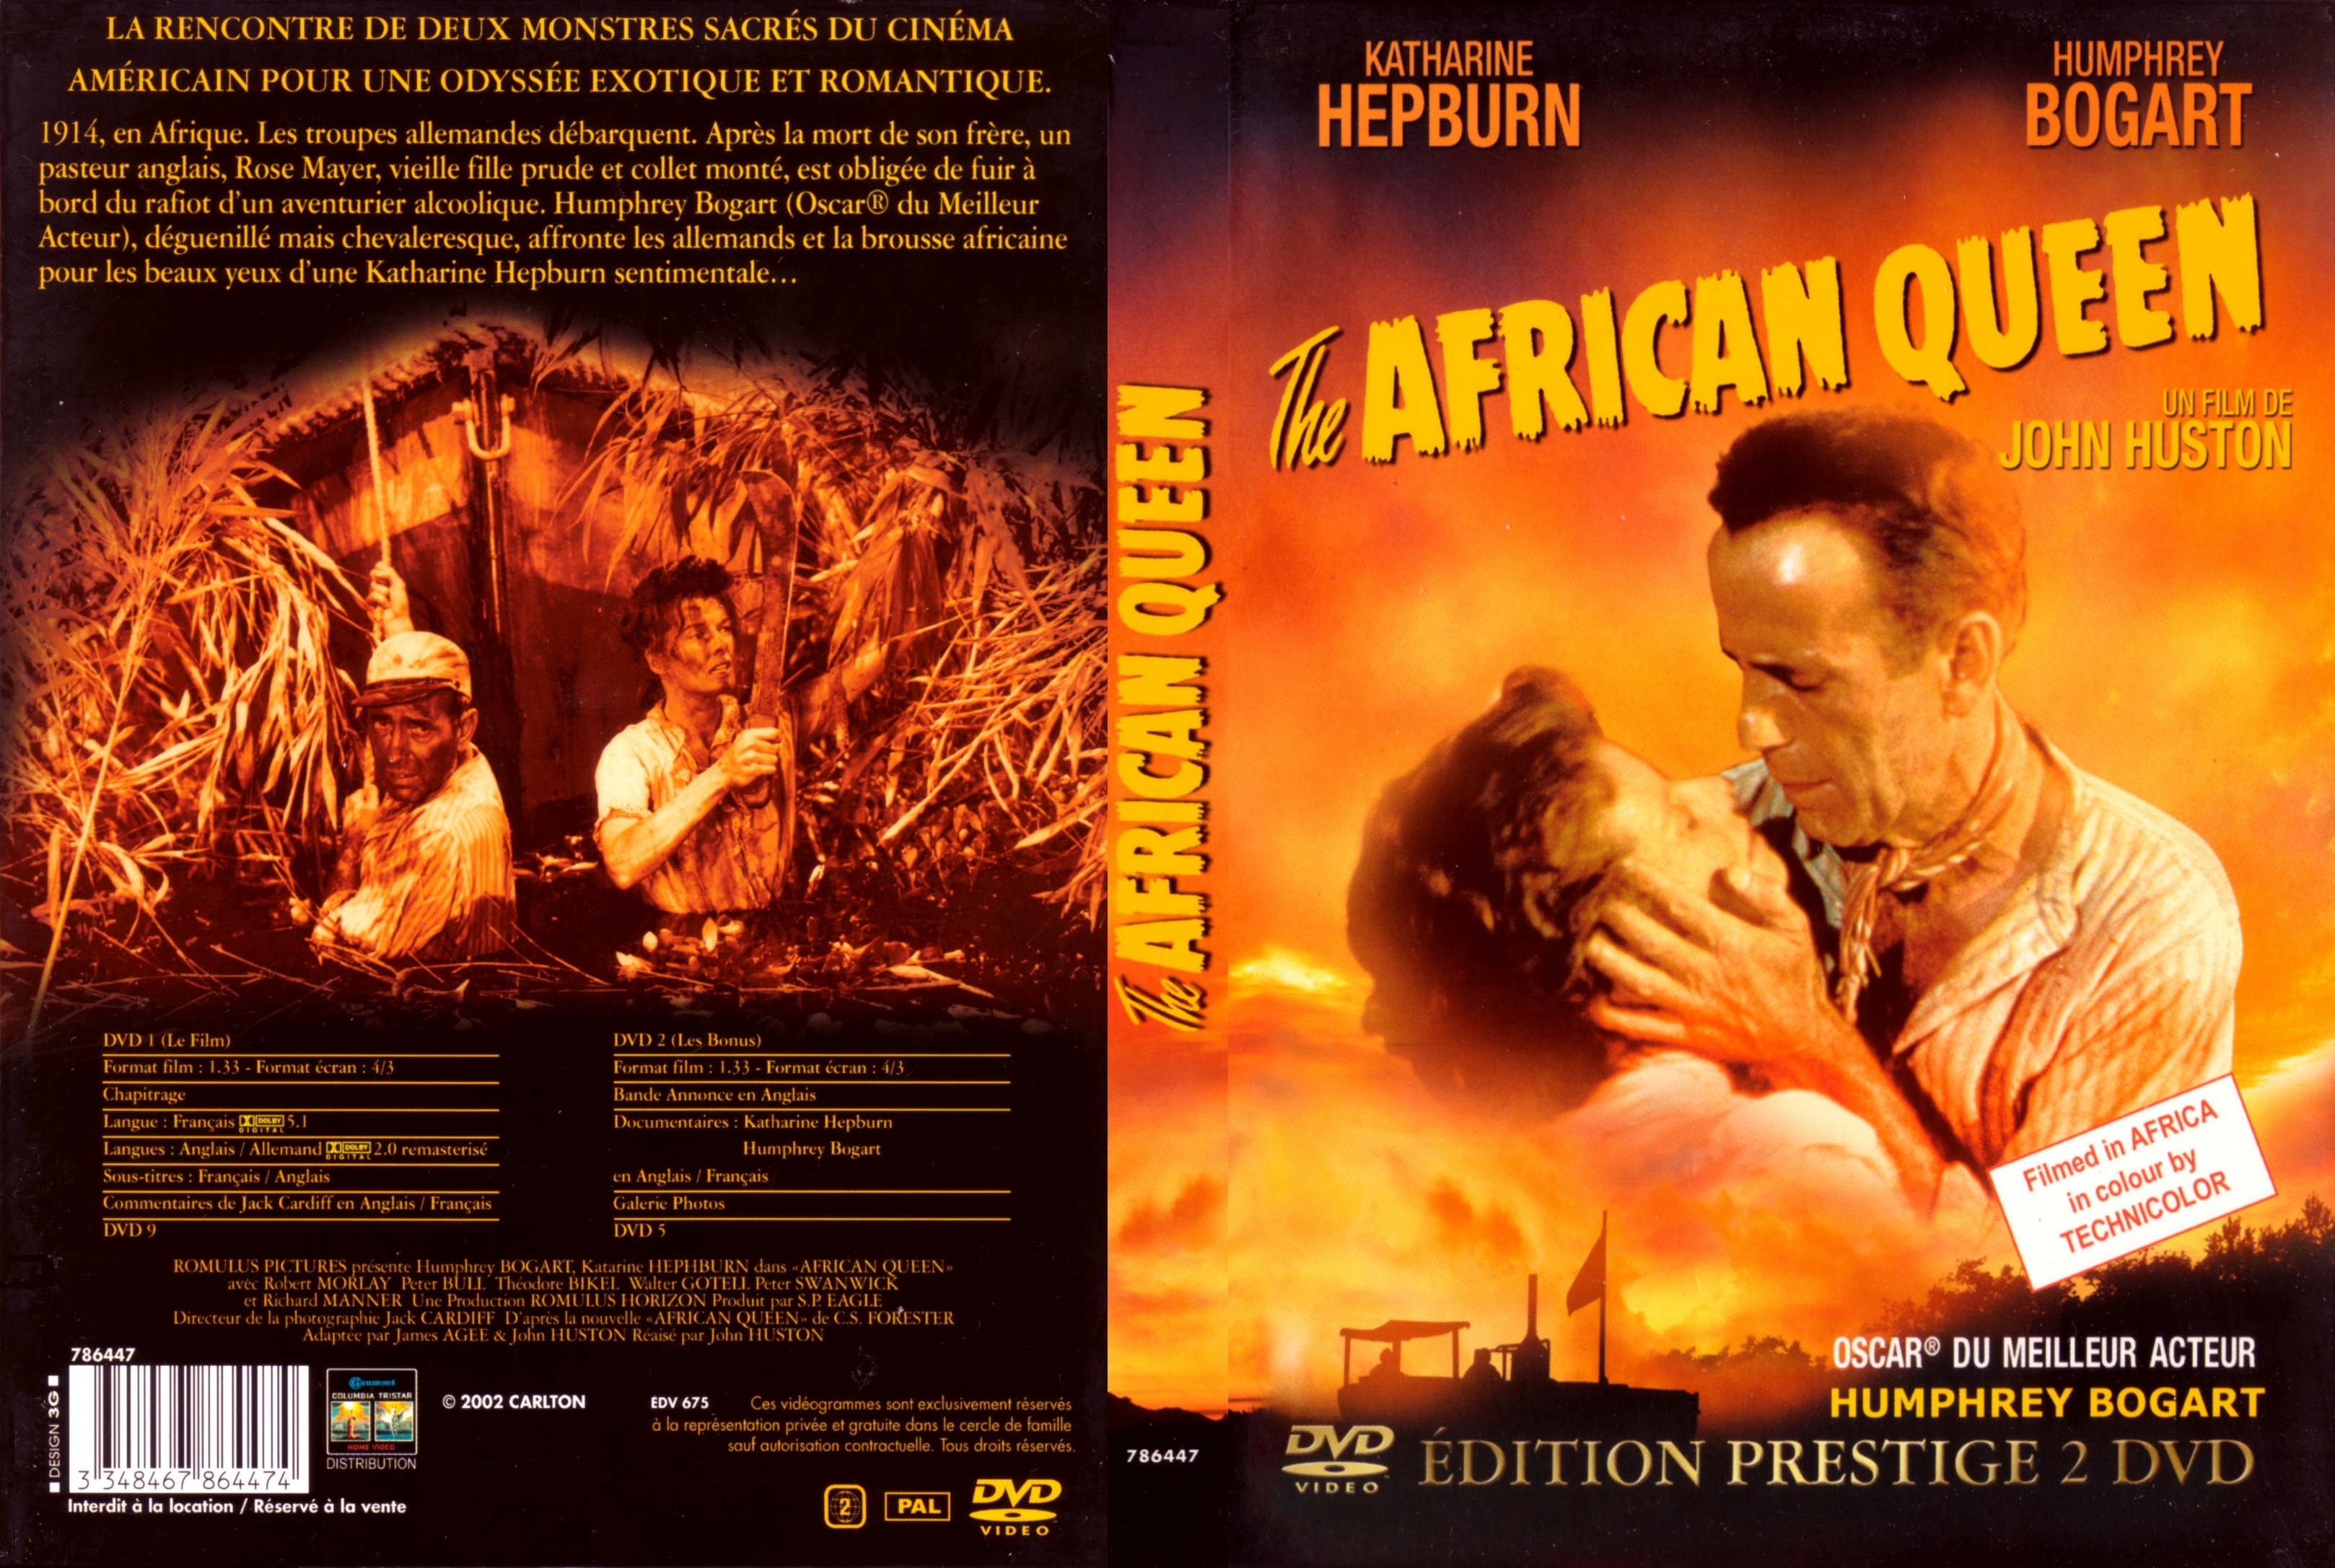 Jaquette DVD The african queen